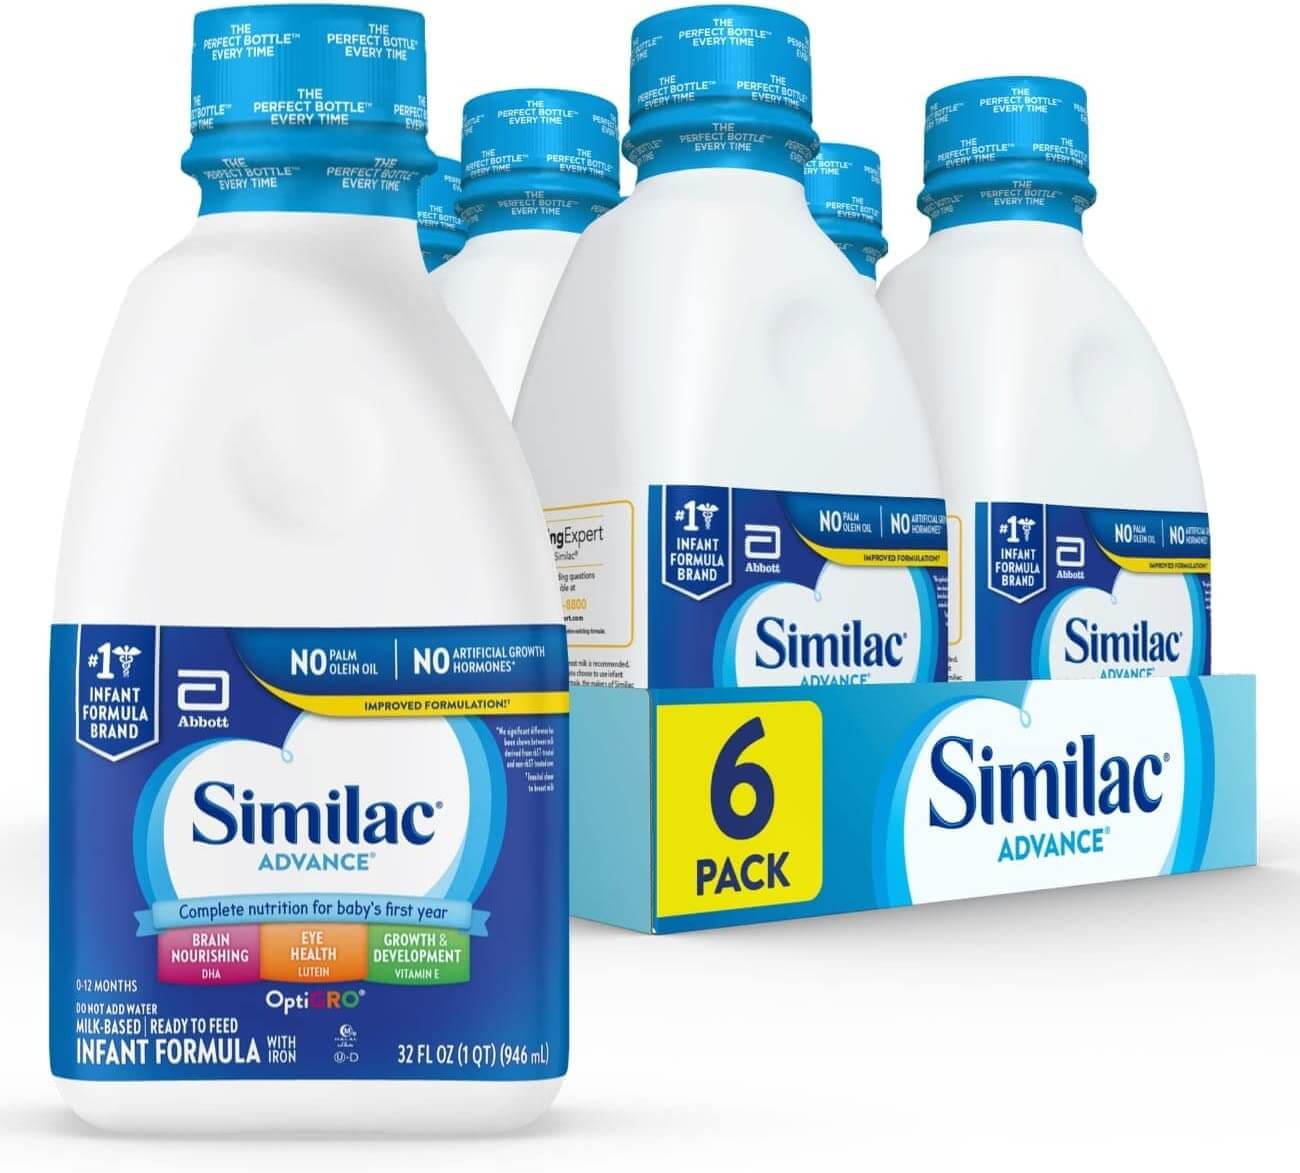 Similac bottles